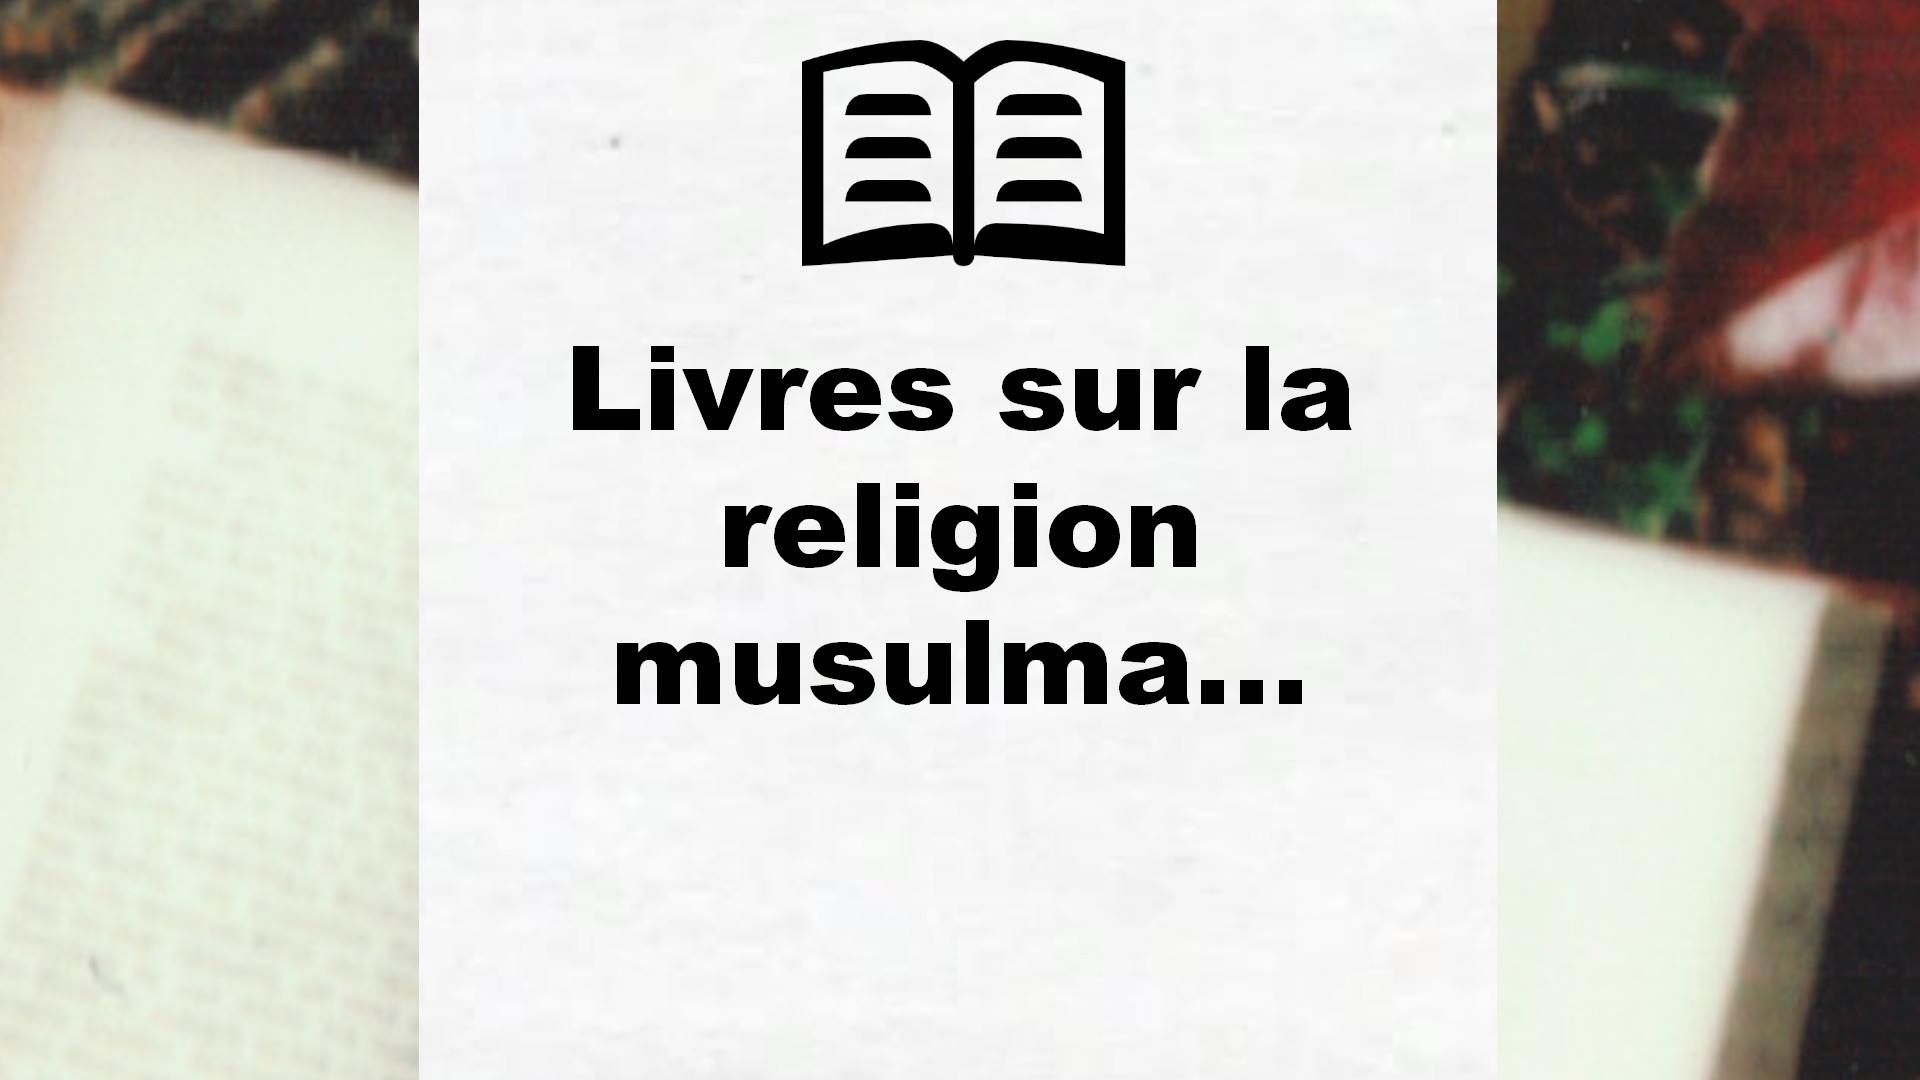 Livres sur la religion musulmane